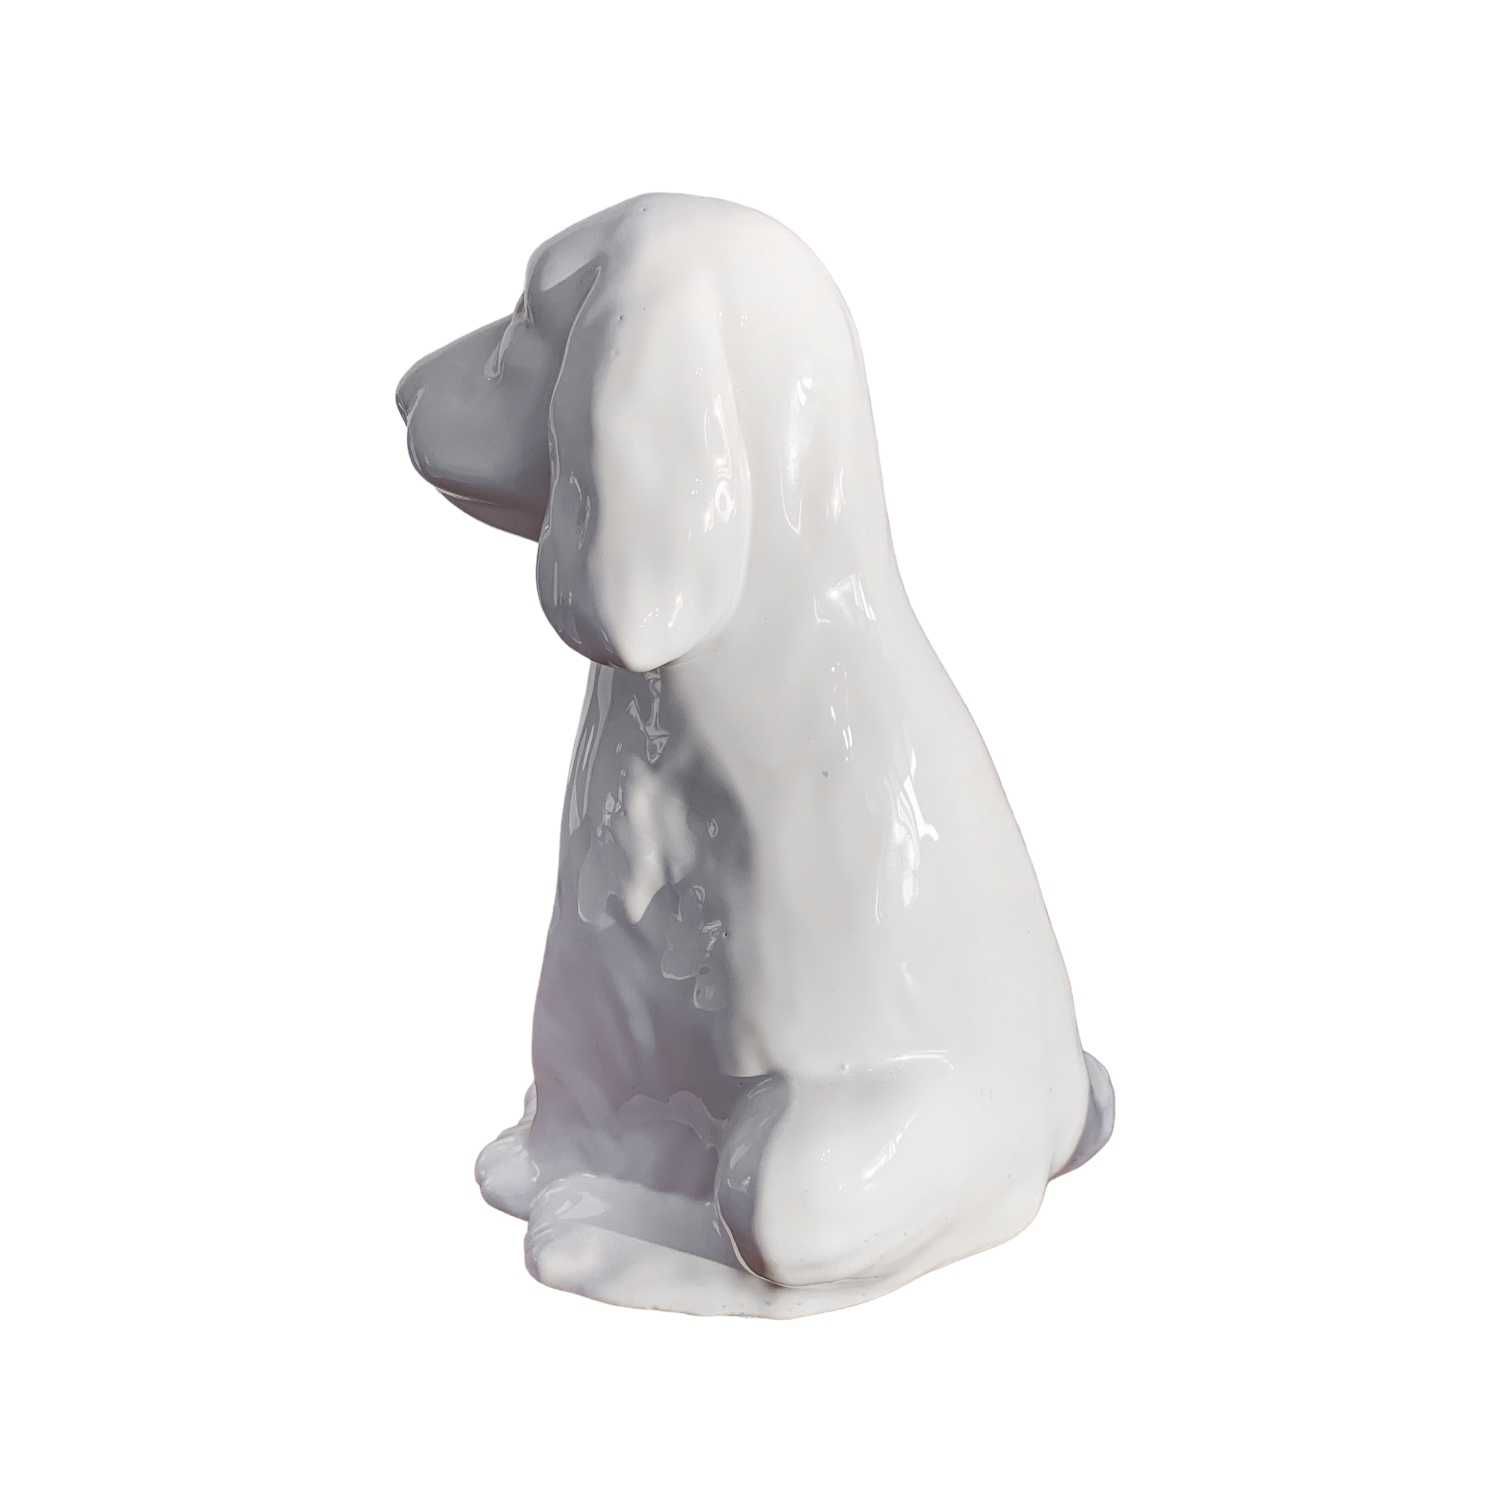 Ceramiczna figurka psa vintage retro prl